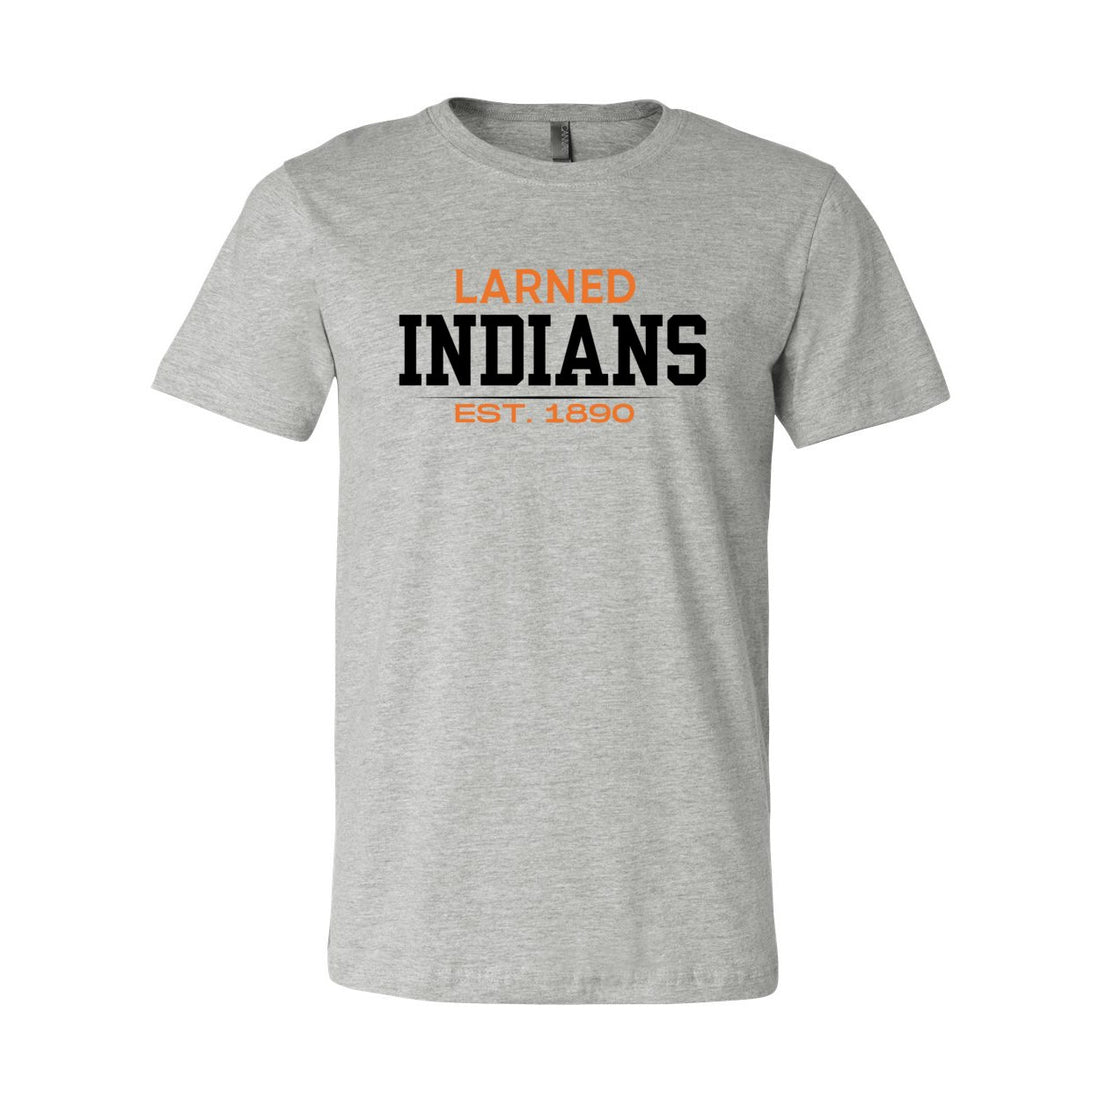 Larned Indians Est Short Sleeve Jersey Tee - T - Shirts - Positively Sassy - Larned Indians Est Short Sleeve Jersey Tee